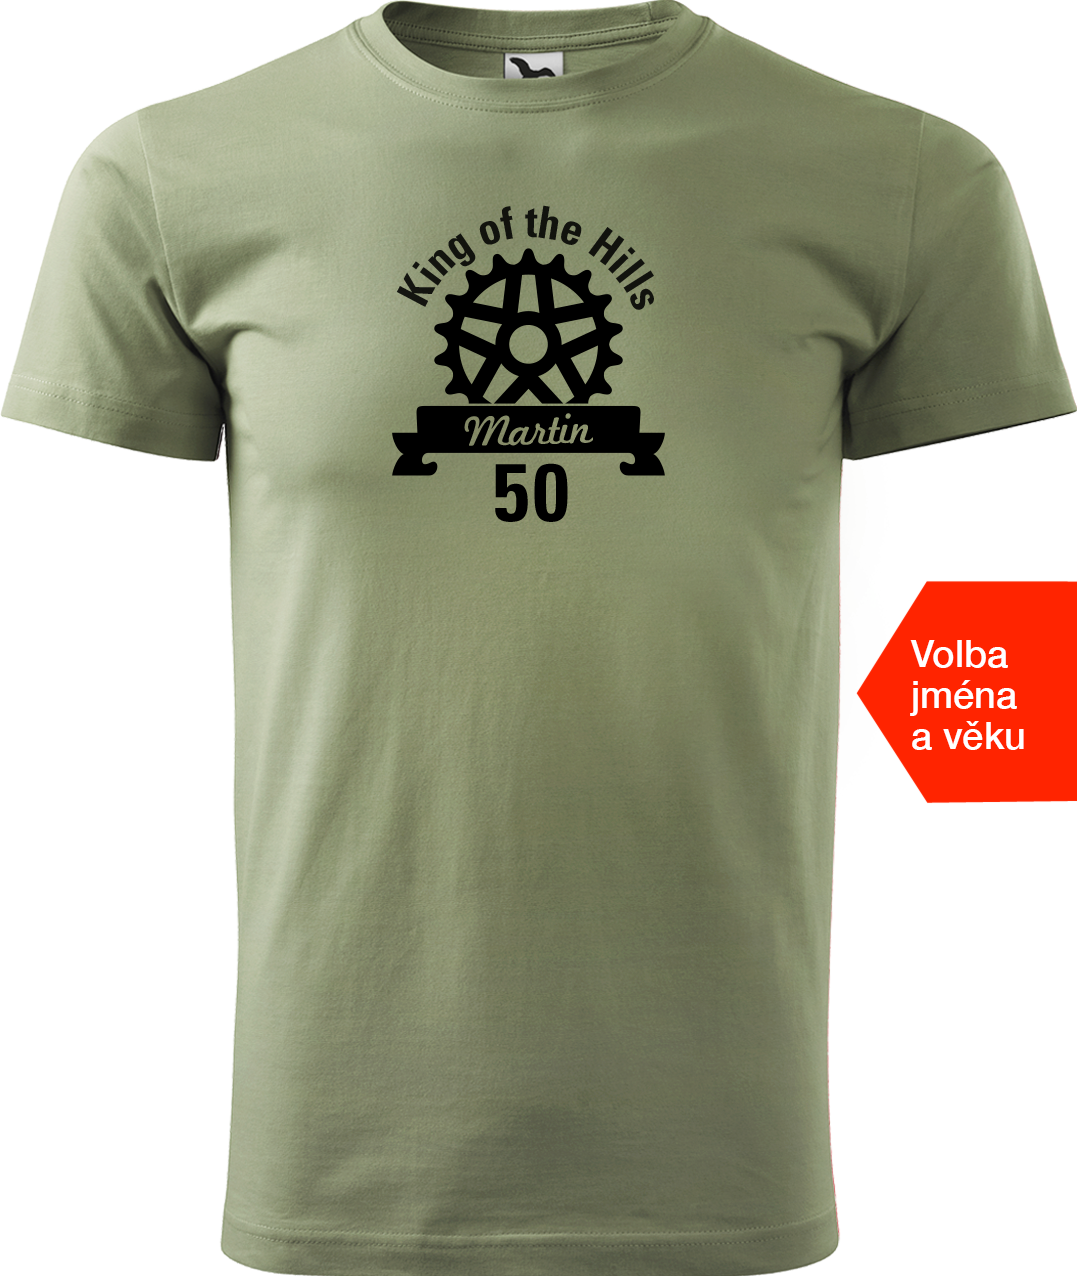 Pánské tričko pro cyklistu se jménem - King of the Hills Velikost: XL, Barva: Světlá khaki (28)